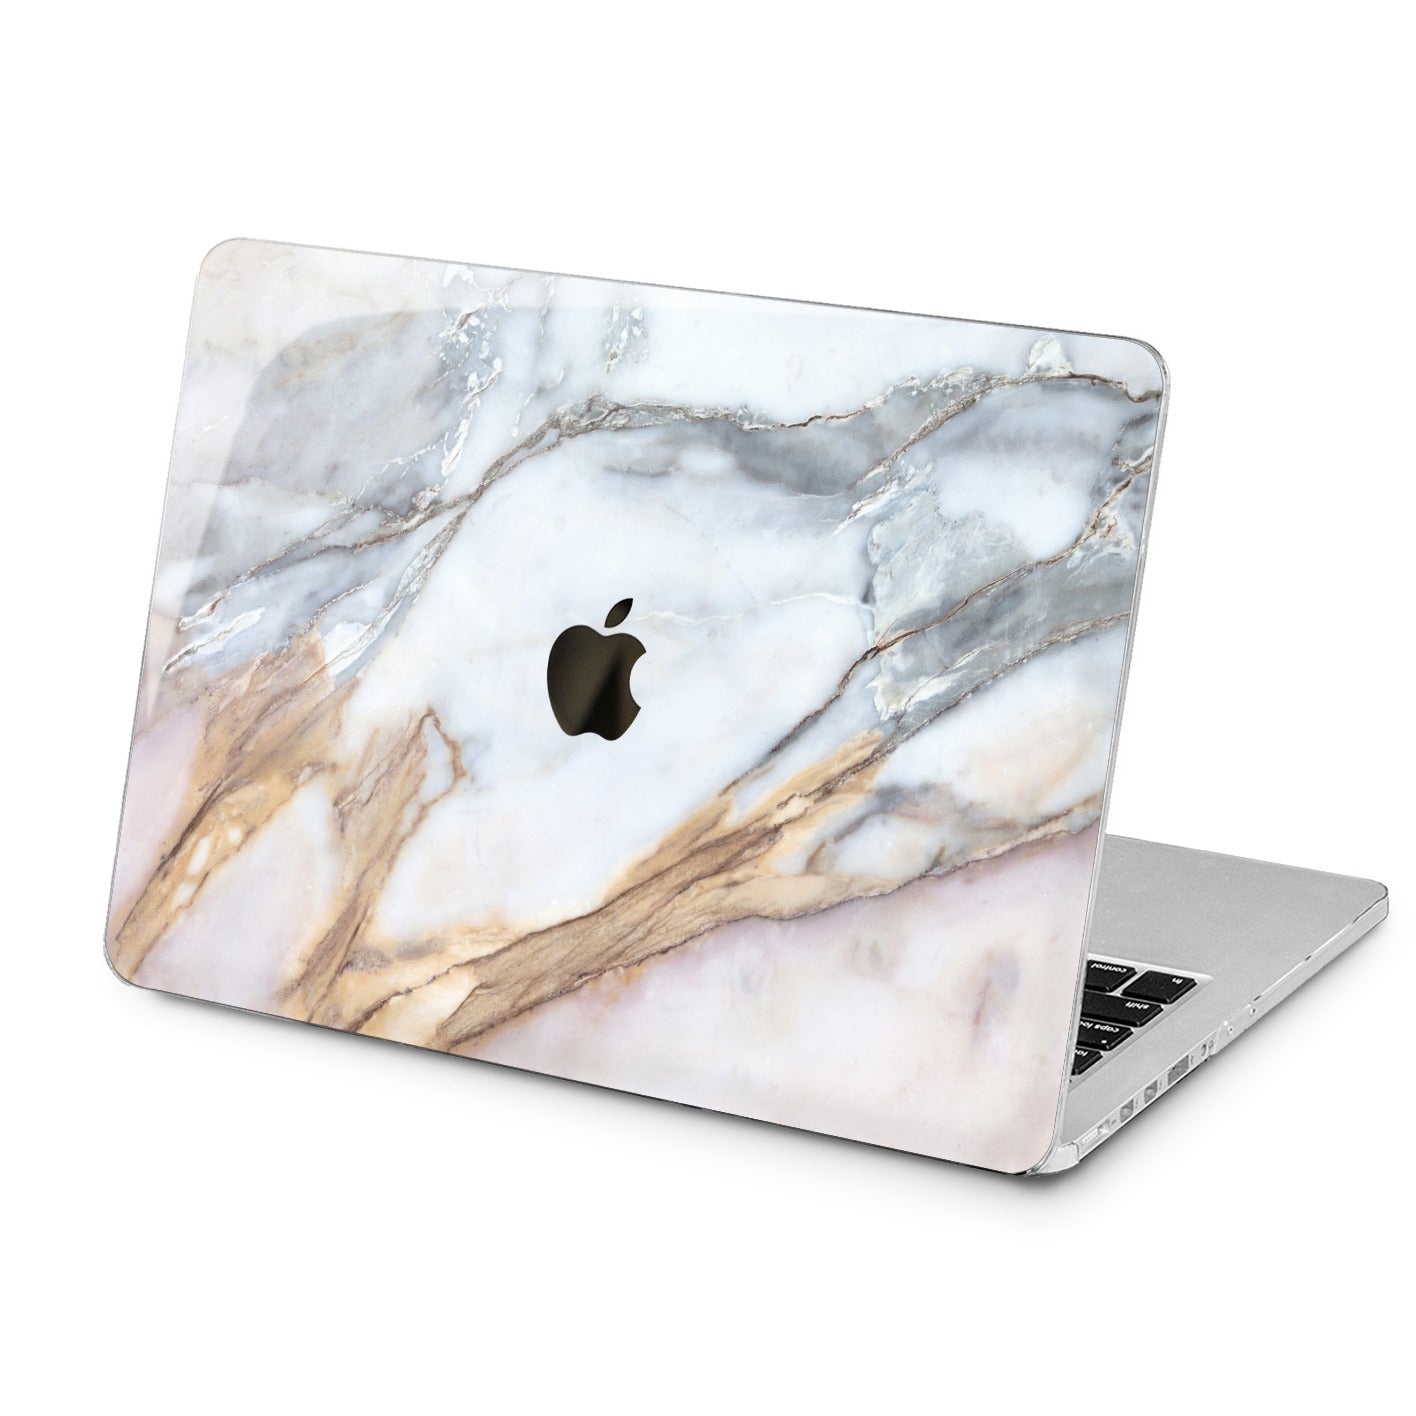 Lex Altern Lex Altern White Stone Case for your Laptop Apple Macbook.